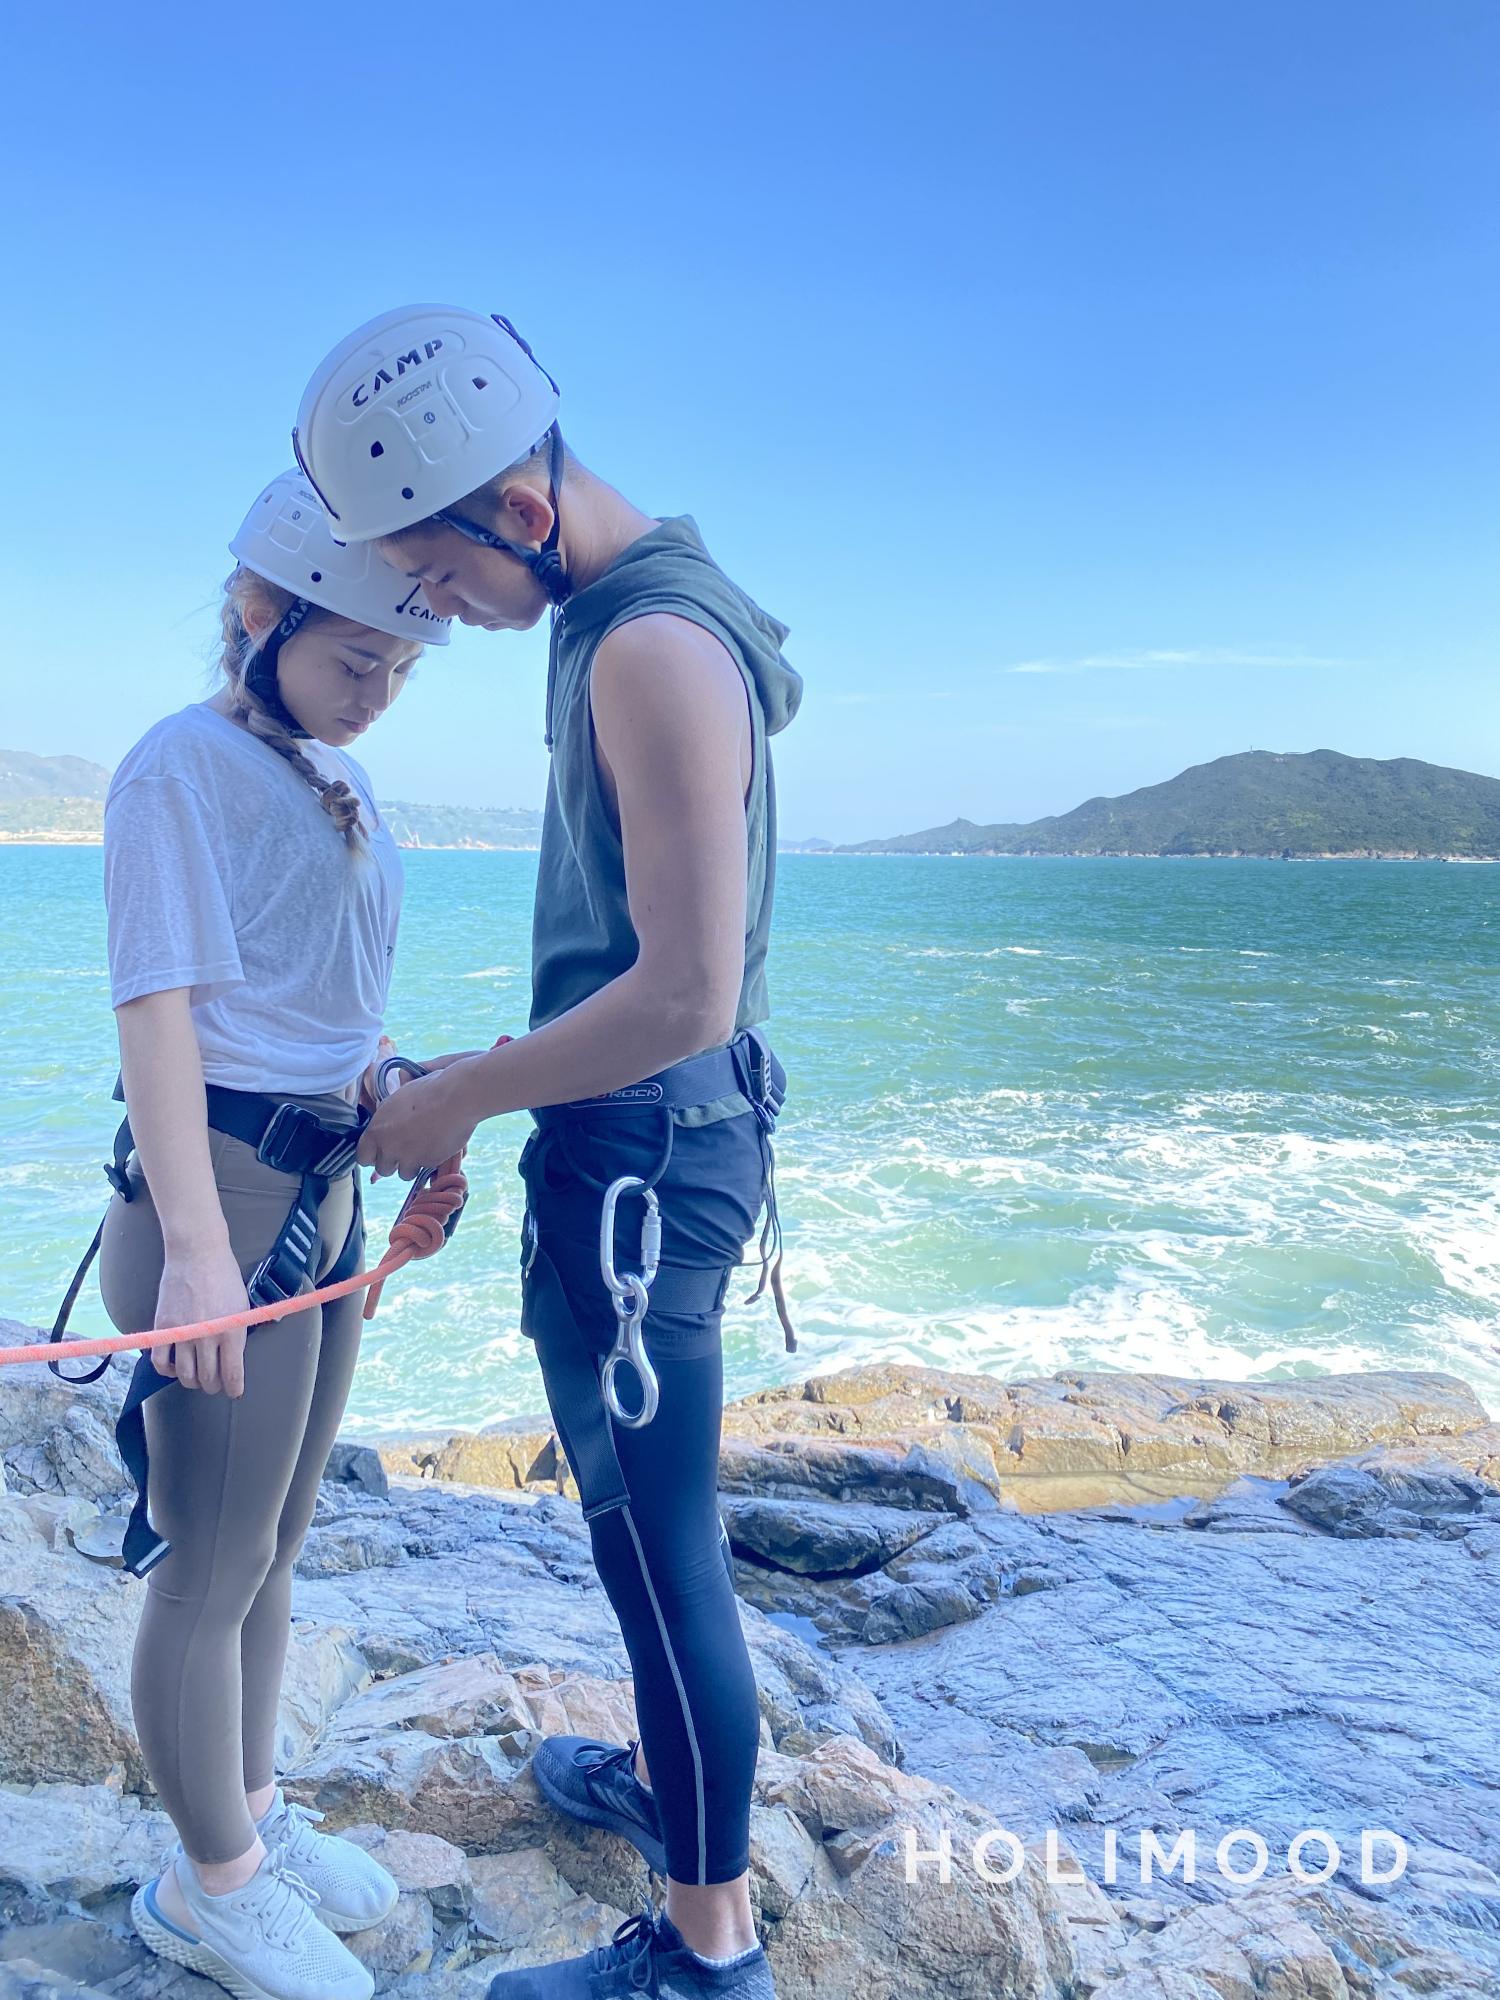 Explorer Hong Kong 【歌連臣角】沿繩下降及攀岩 體驗 3